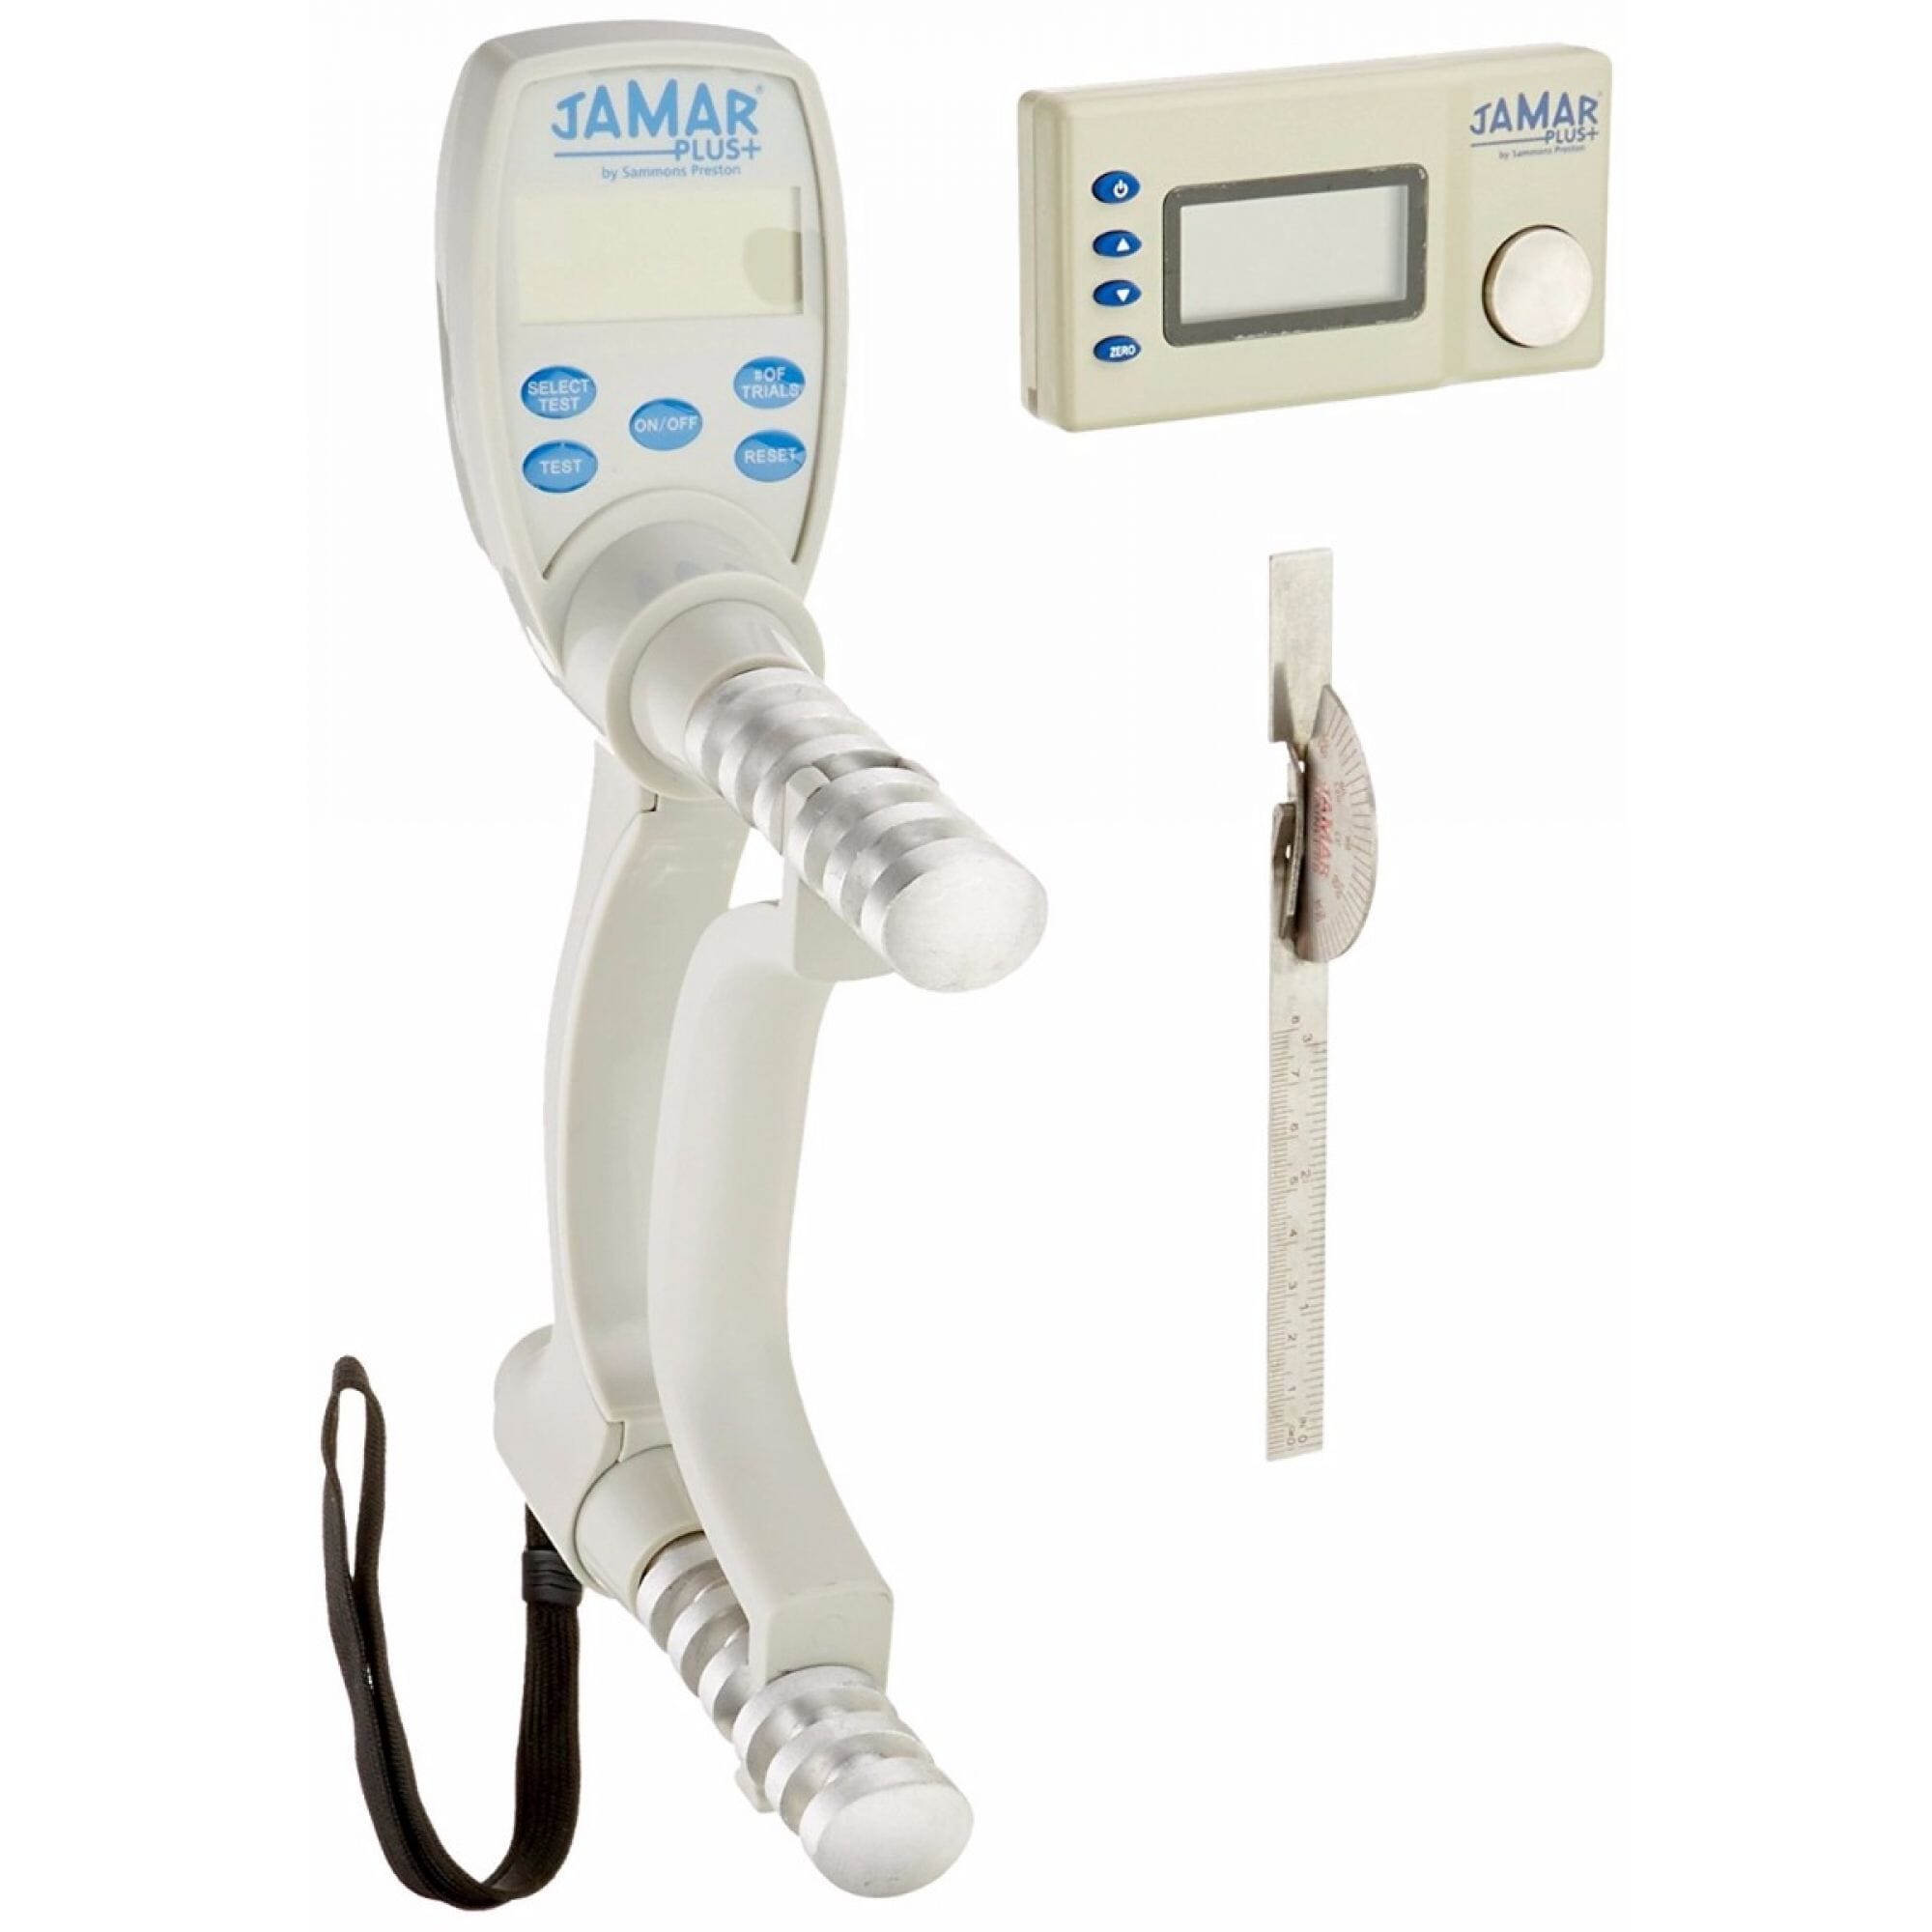 View Jamar Plus Hand Evaluation Kit information